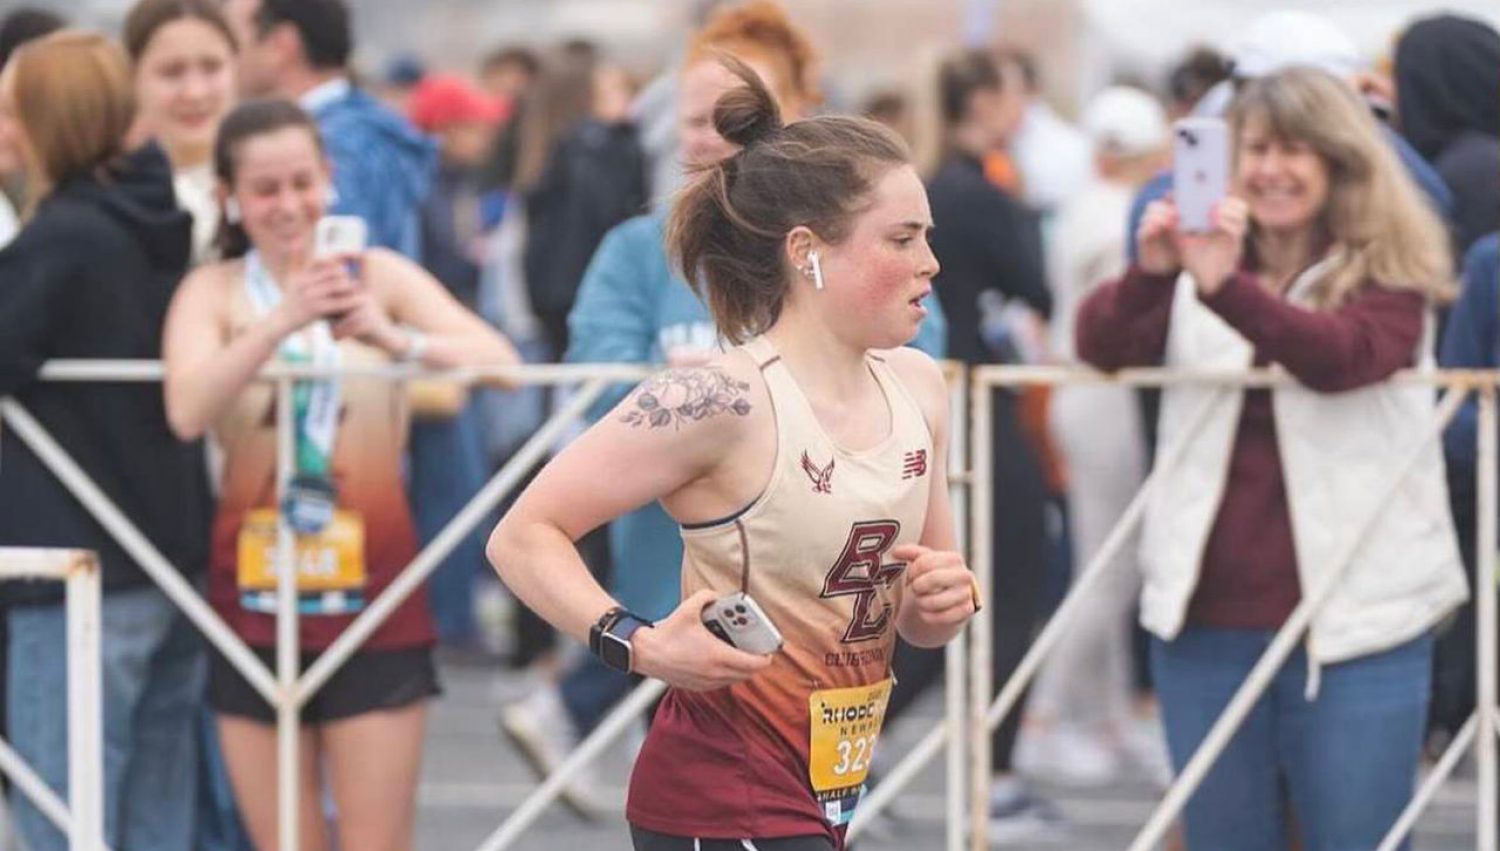 A ϱ student running the marathon